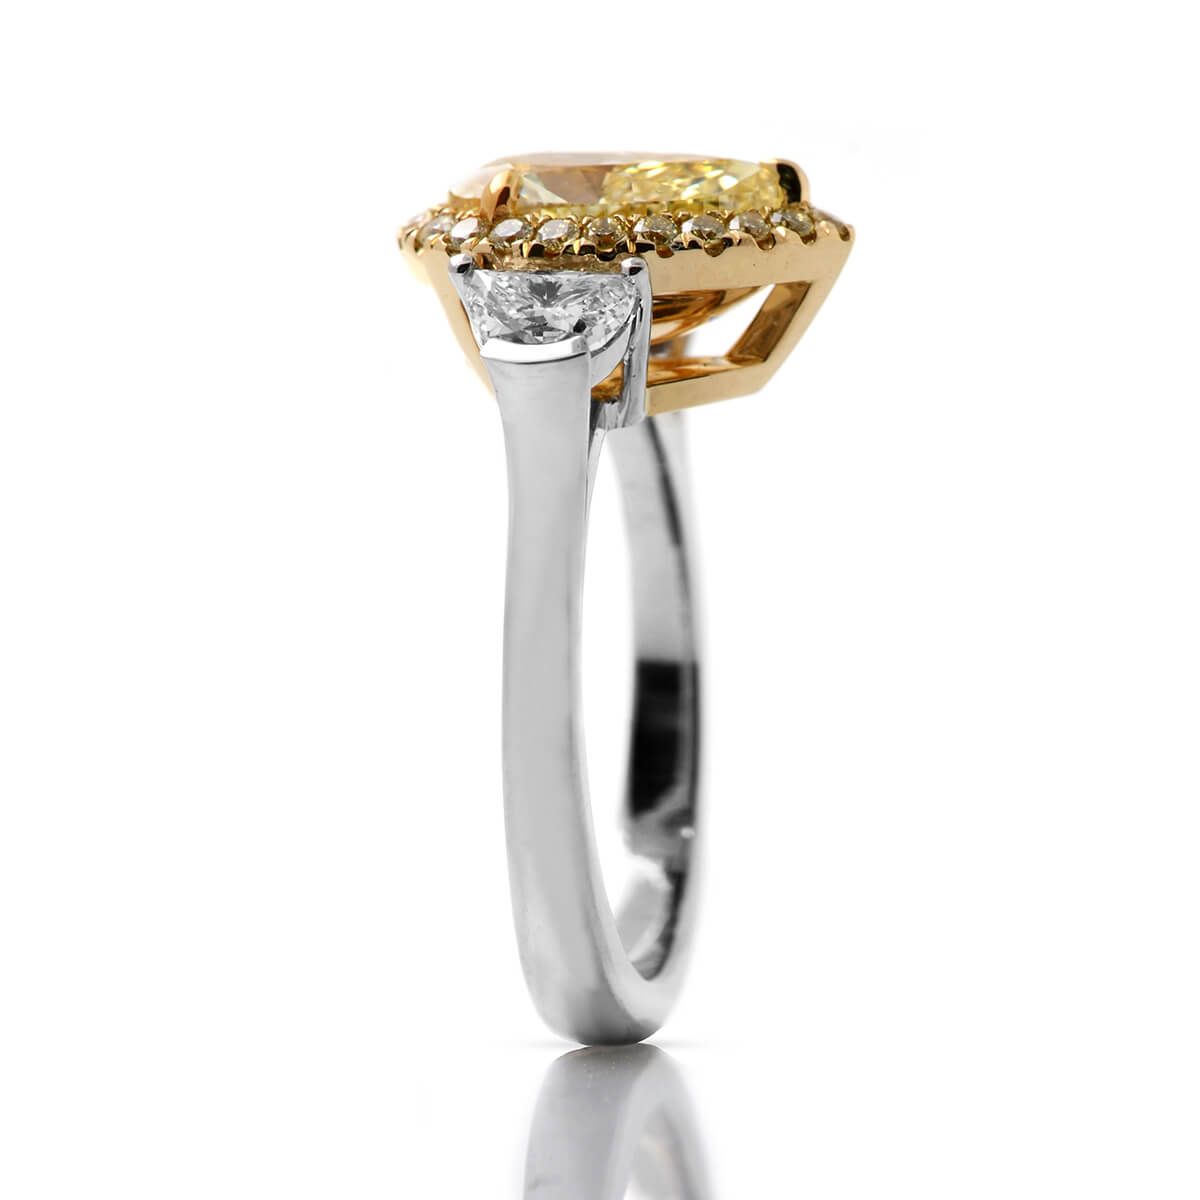 Fancy Light Yellow Diamond Ring, 2.40 Ct. (3.30 Ct. TW), Pear shape, GIA Certified, 2181997975